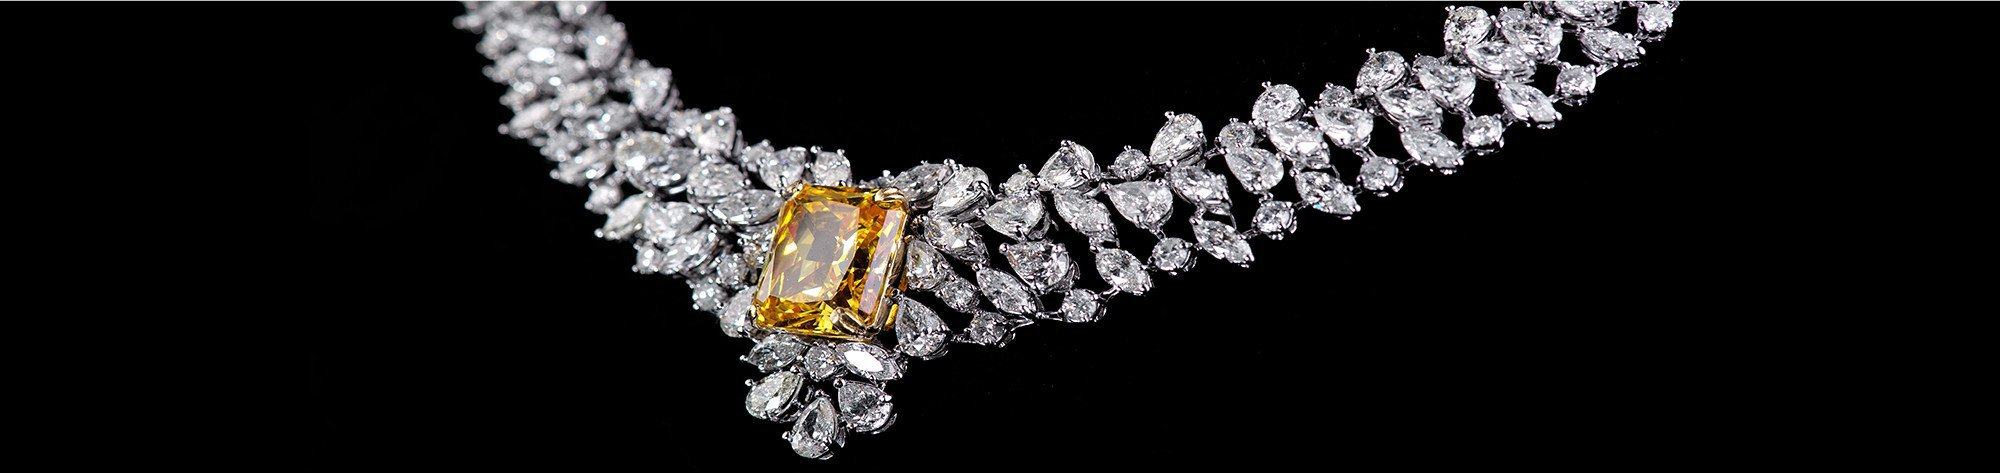 Buy White Diamond Necklace in Houston